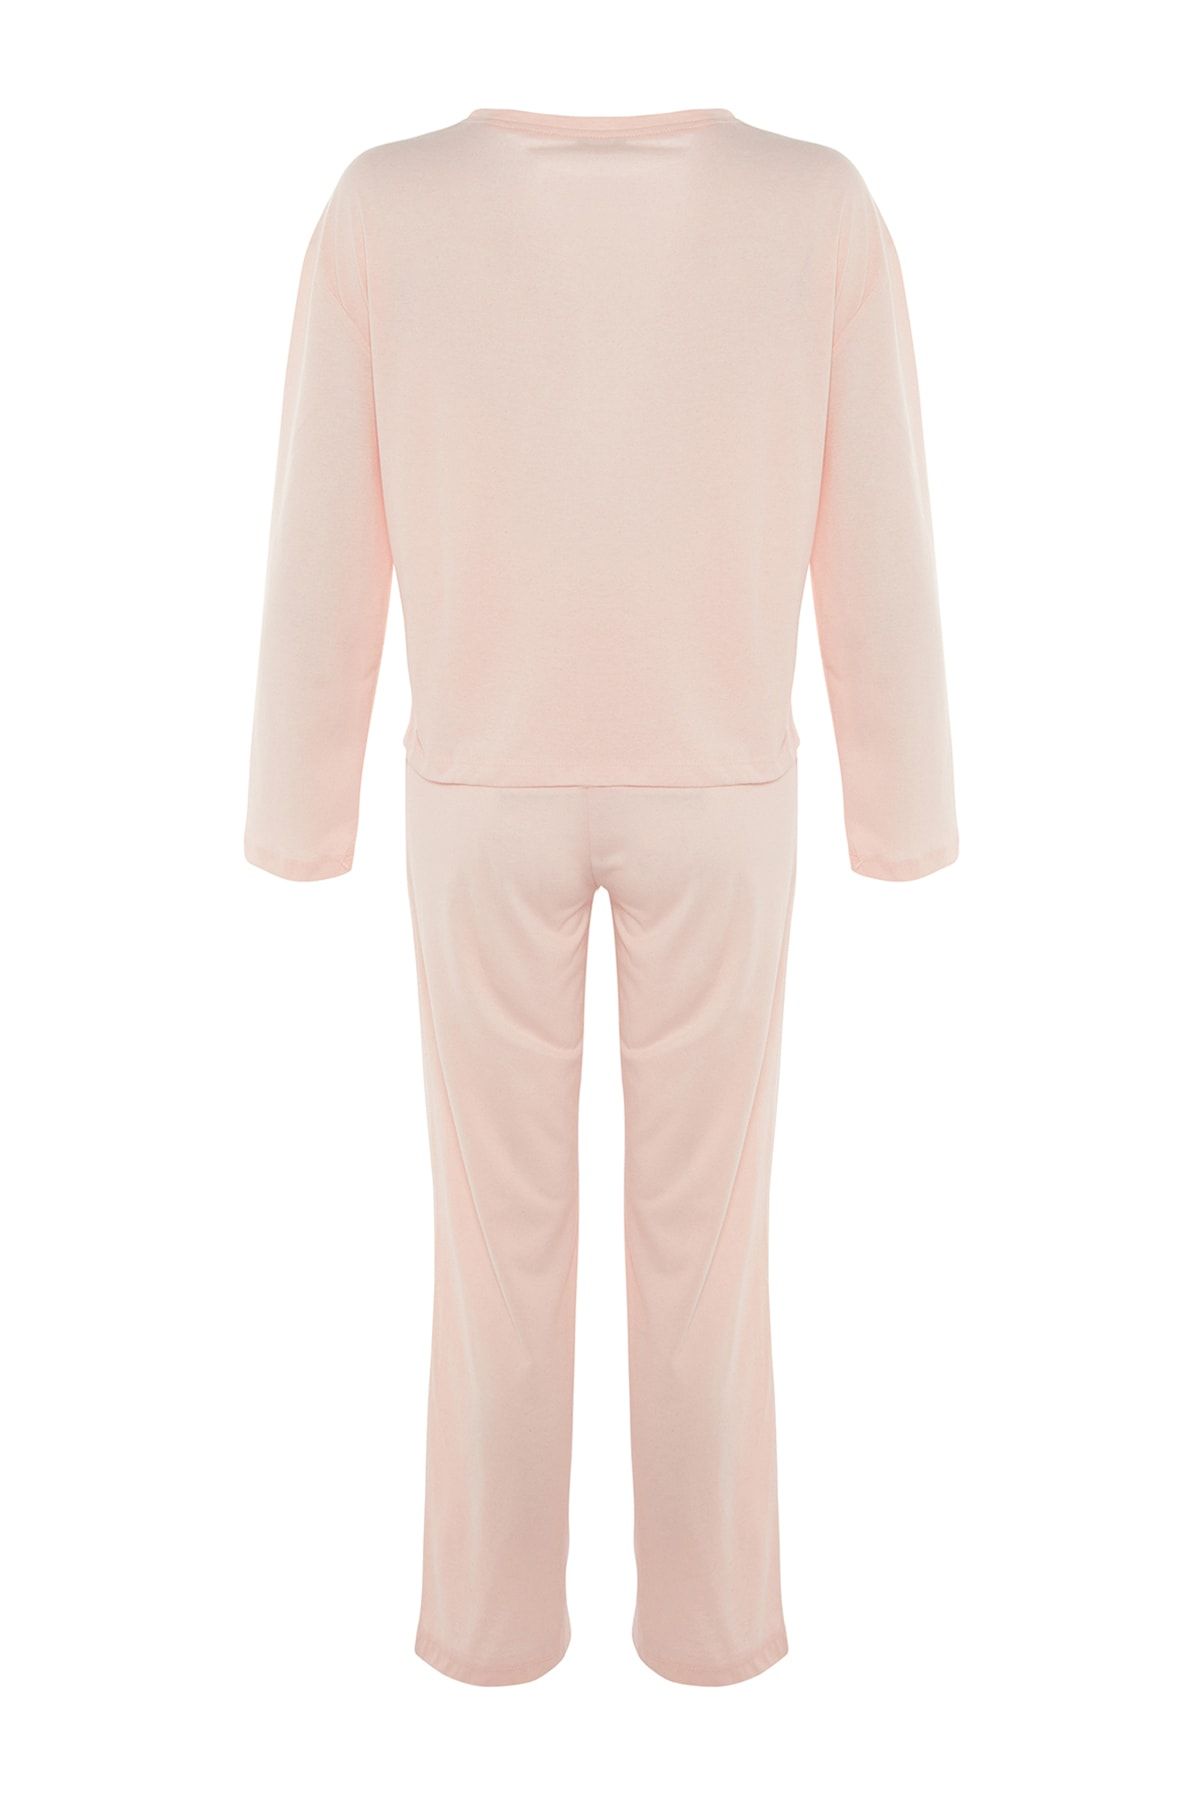 Trendyol Collection Pajama Set - Pink - With Slogan @ Best Price Online